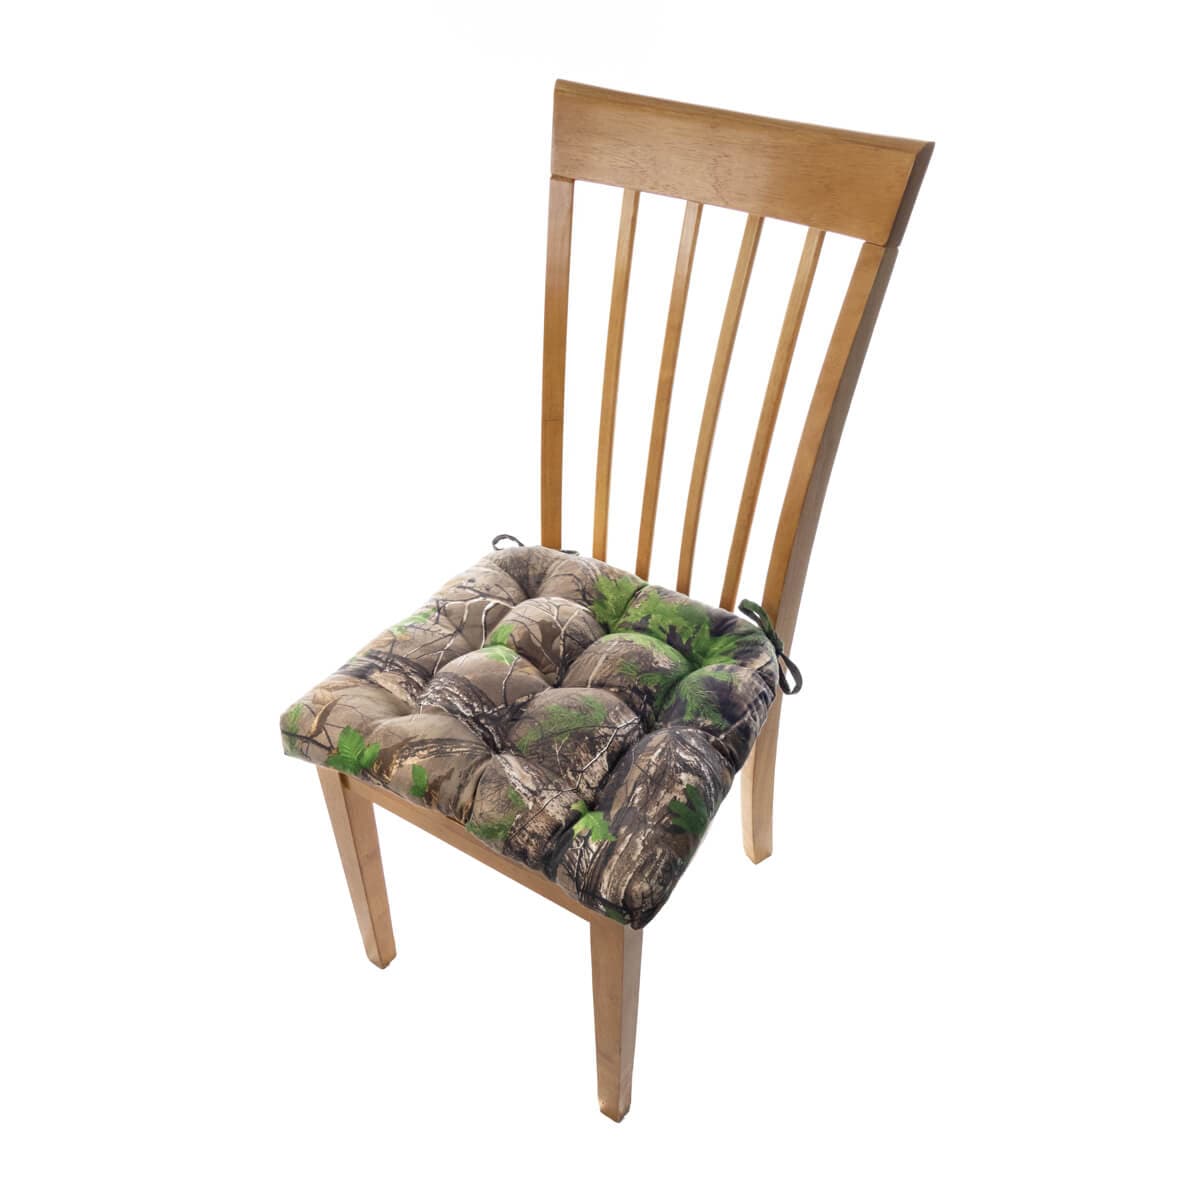 Realtree Xtra Green (R) Camo Chair Pad - Latex Foam Fill